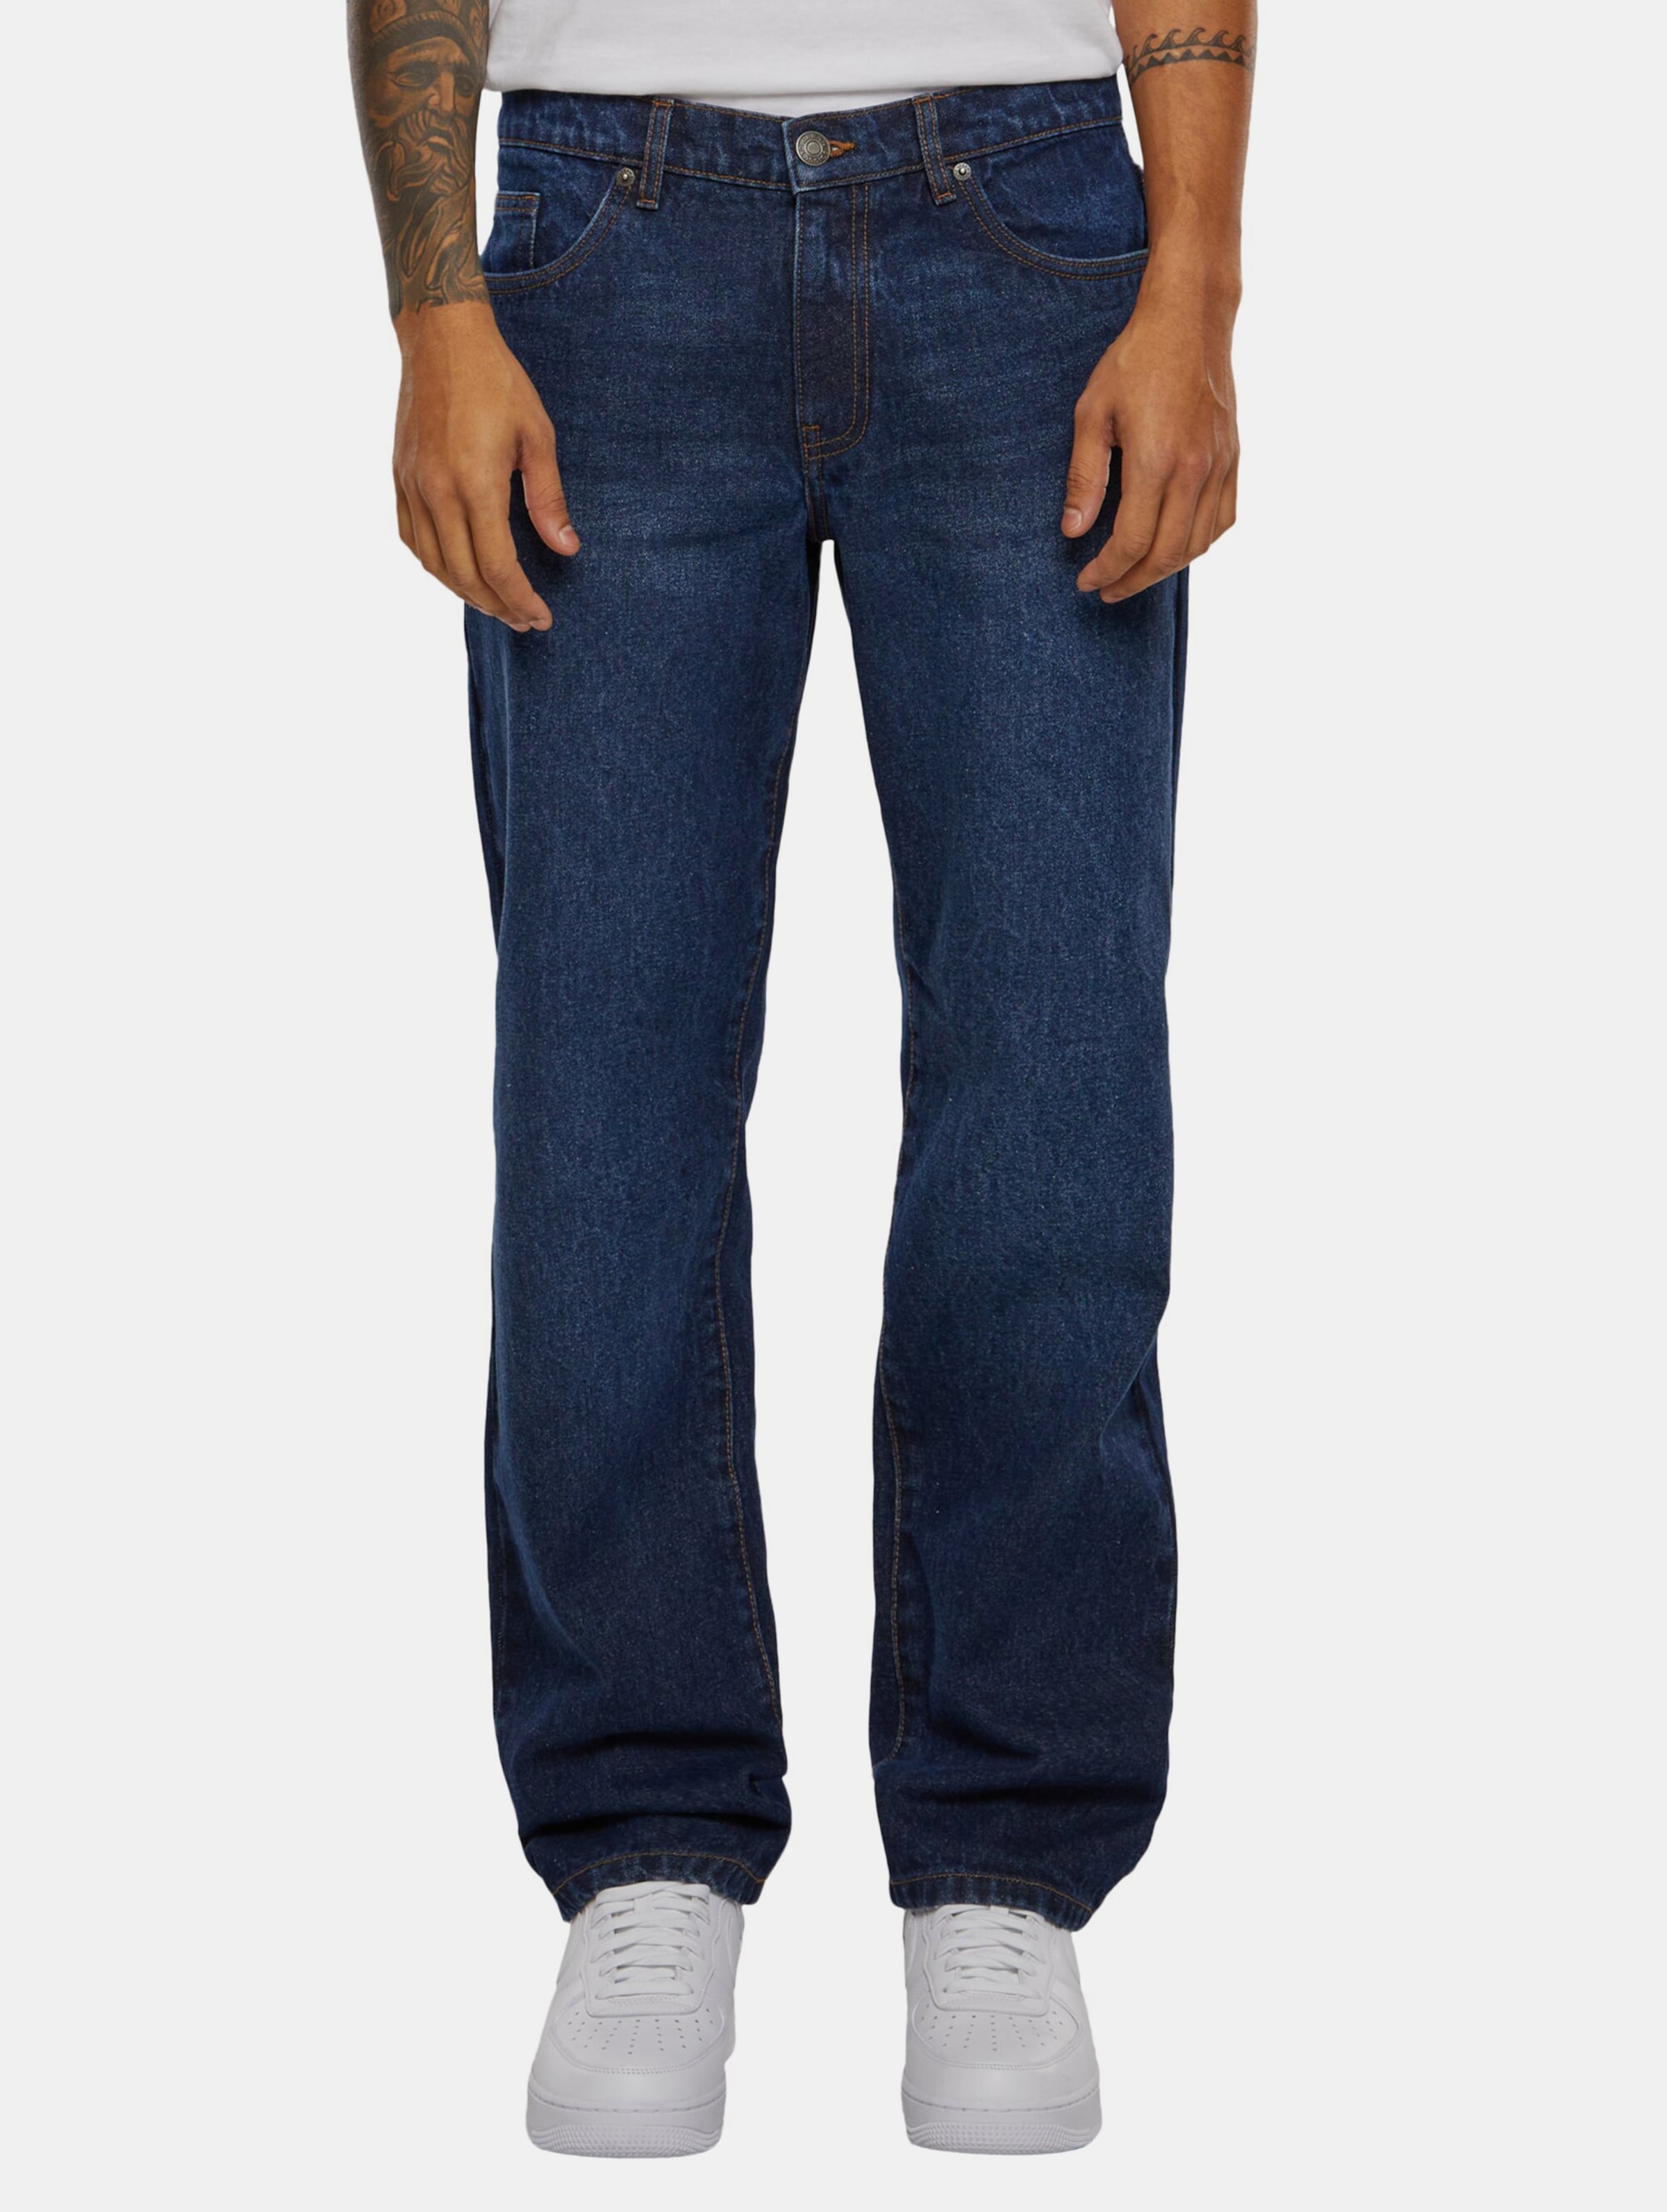 Urban Classics - Heavy Ounce Jeans Broek rechte pijpen - Taille, 33 inch - Blauw